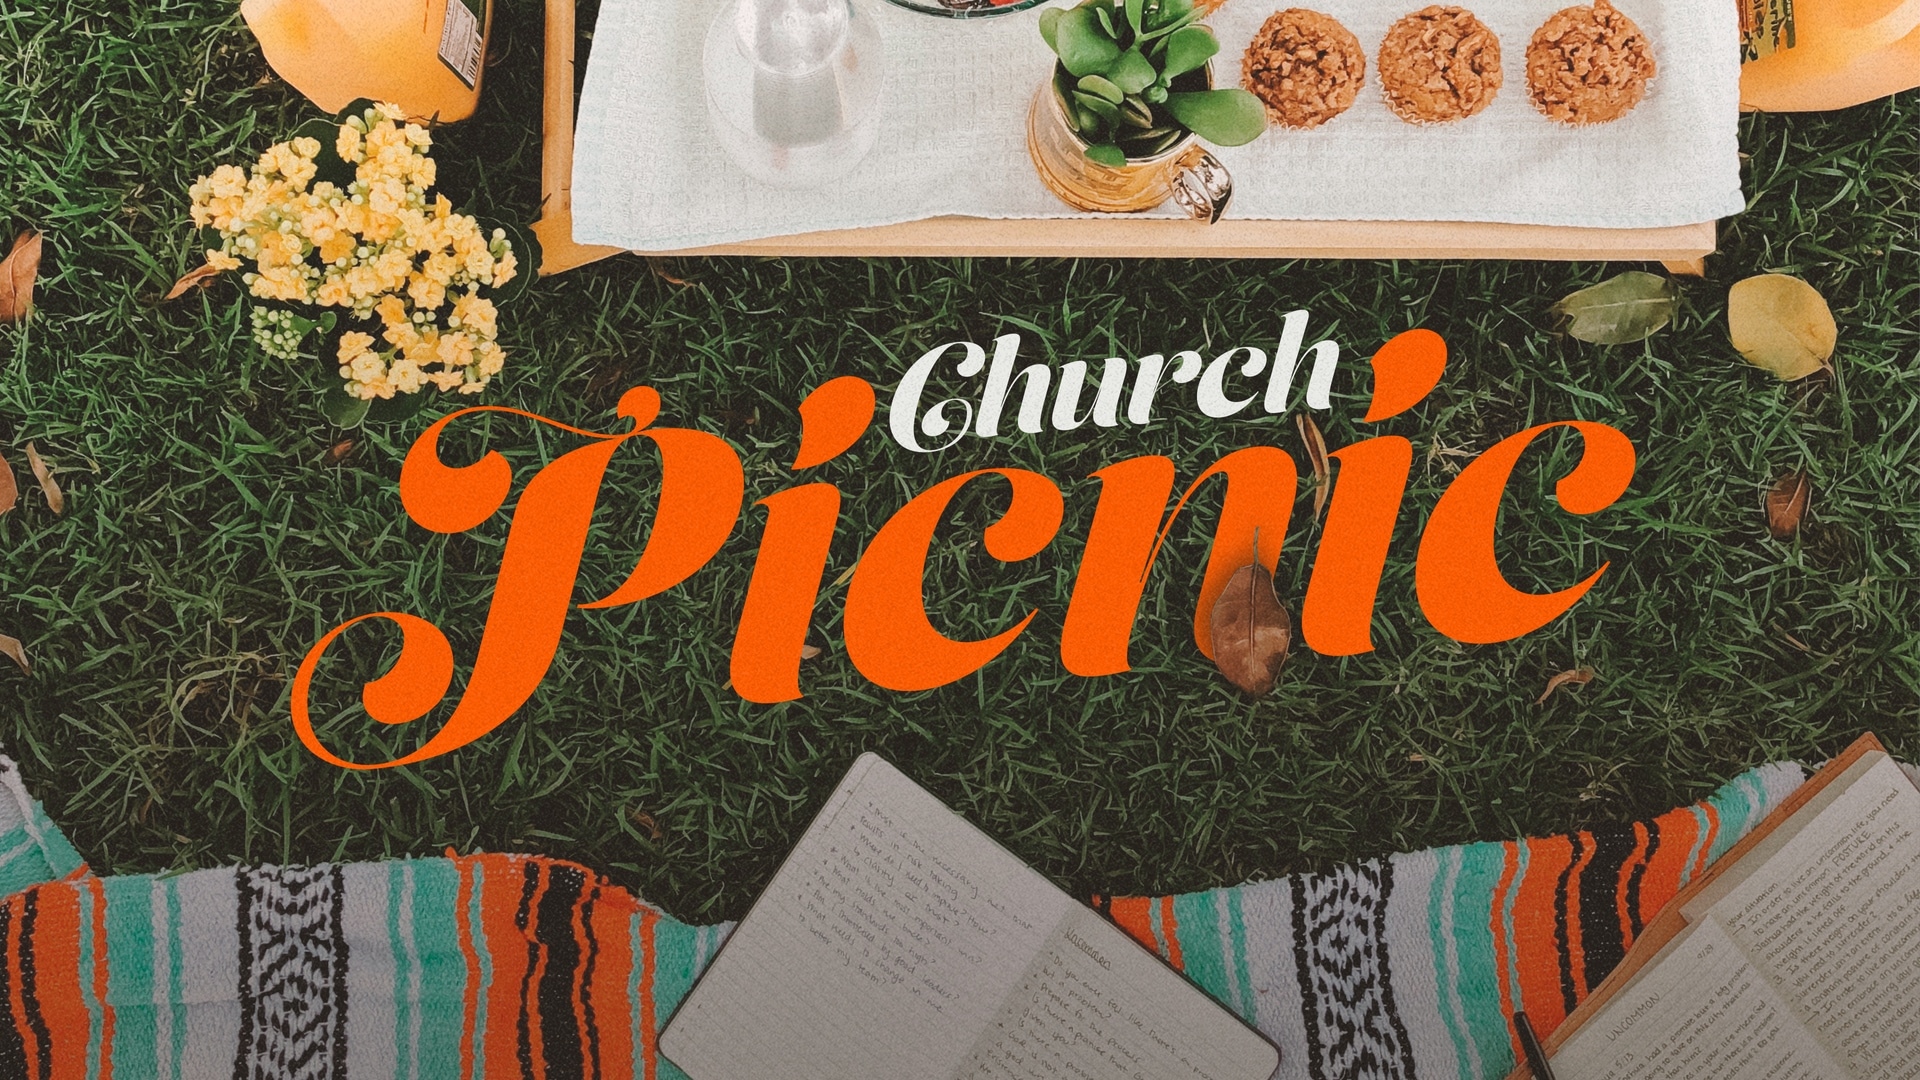 AllChurch Picnic Harvest Church